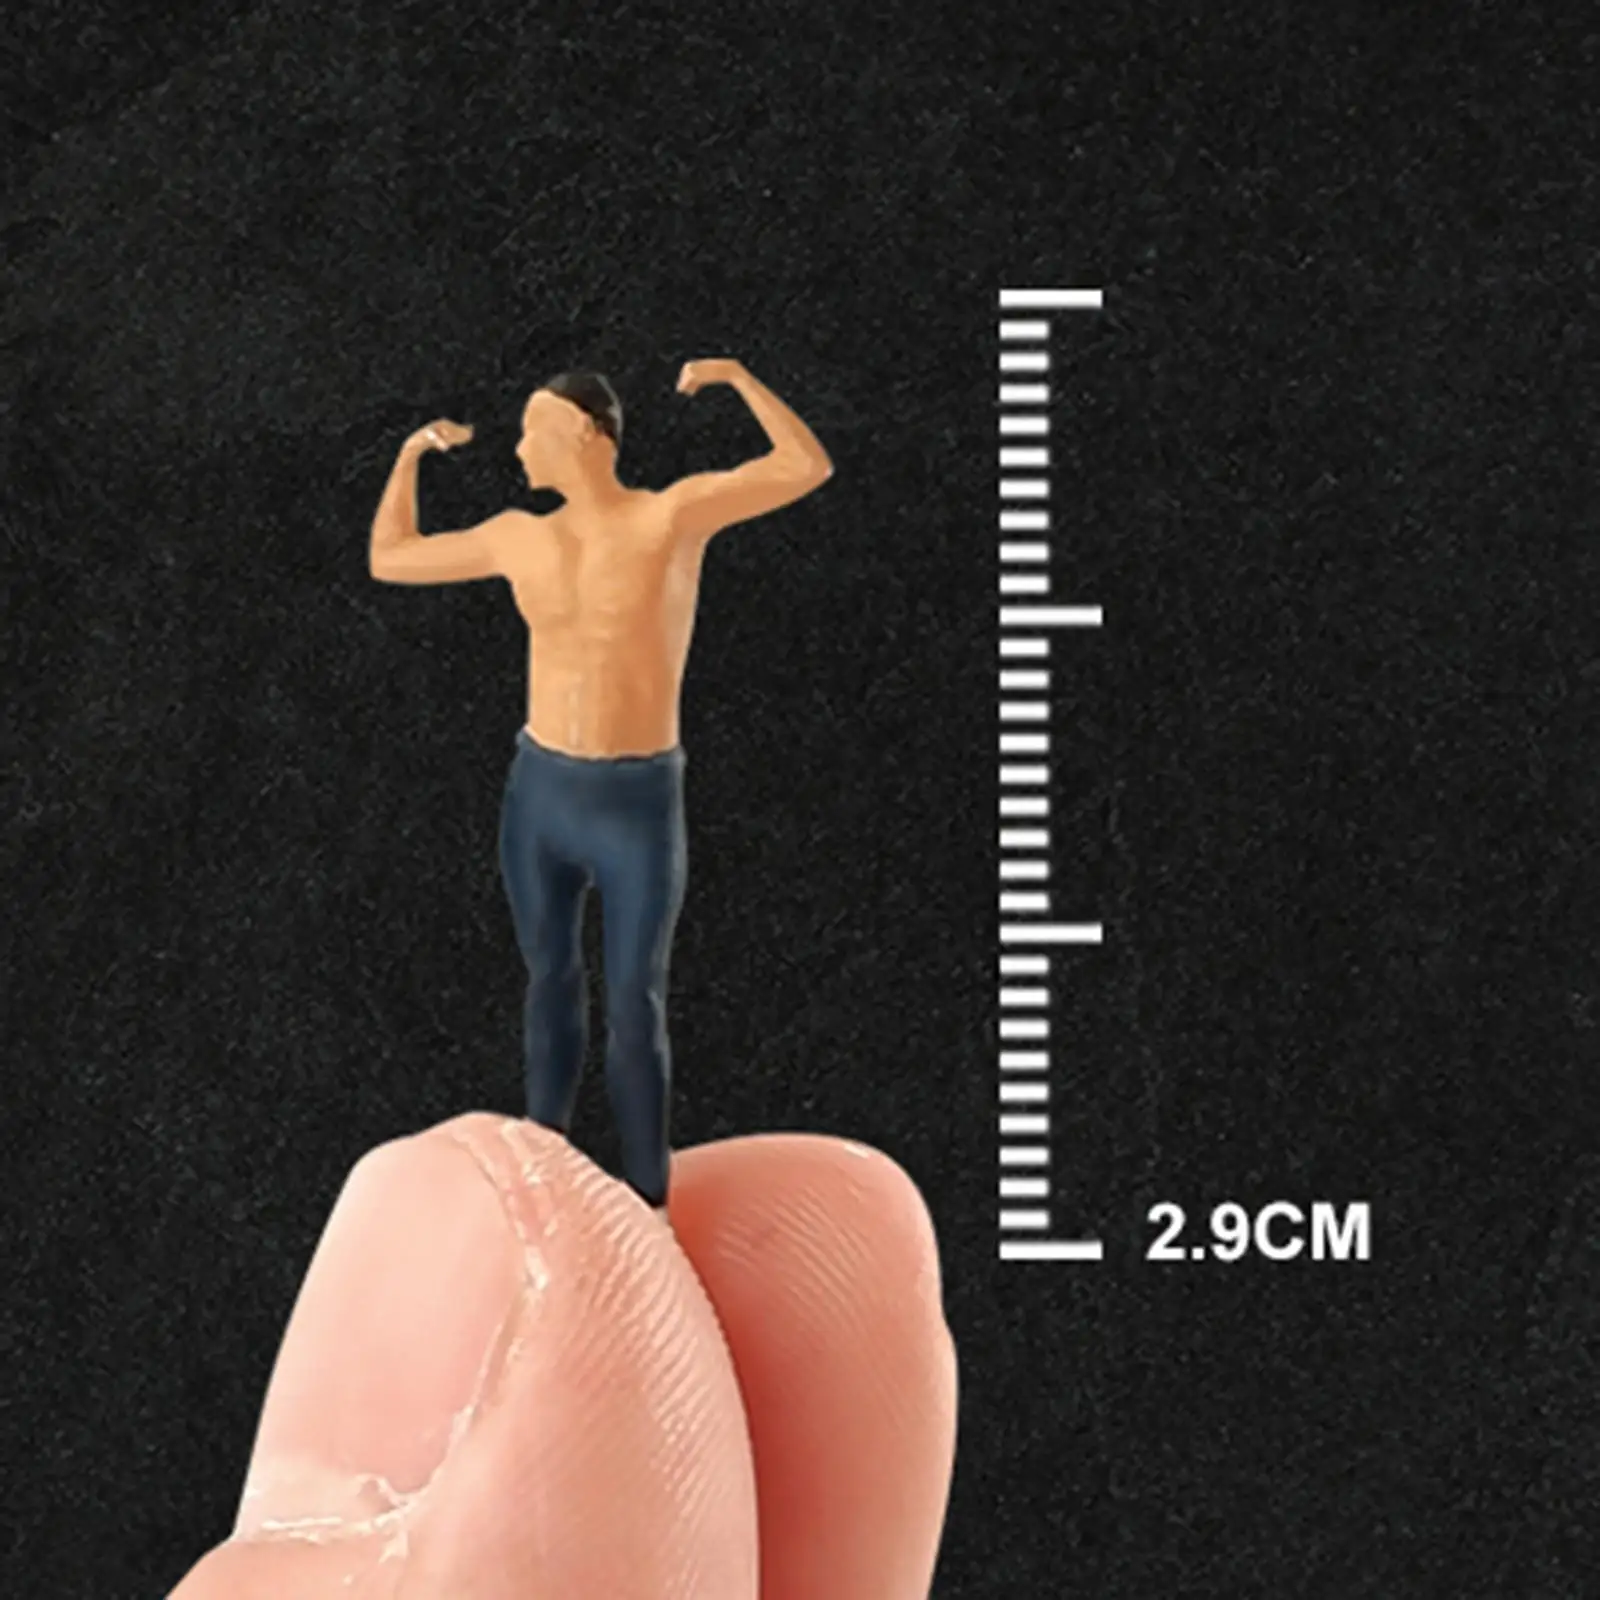 1/64 Scale Handmade Miniature Figurines Model Accessories for Bodybuilder